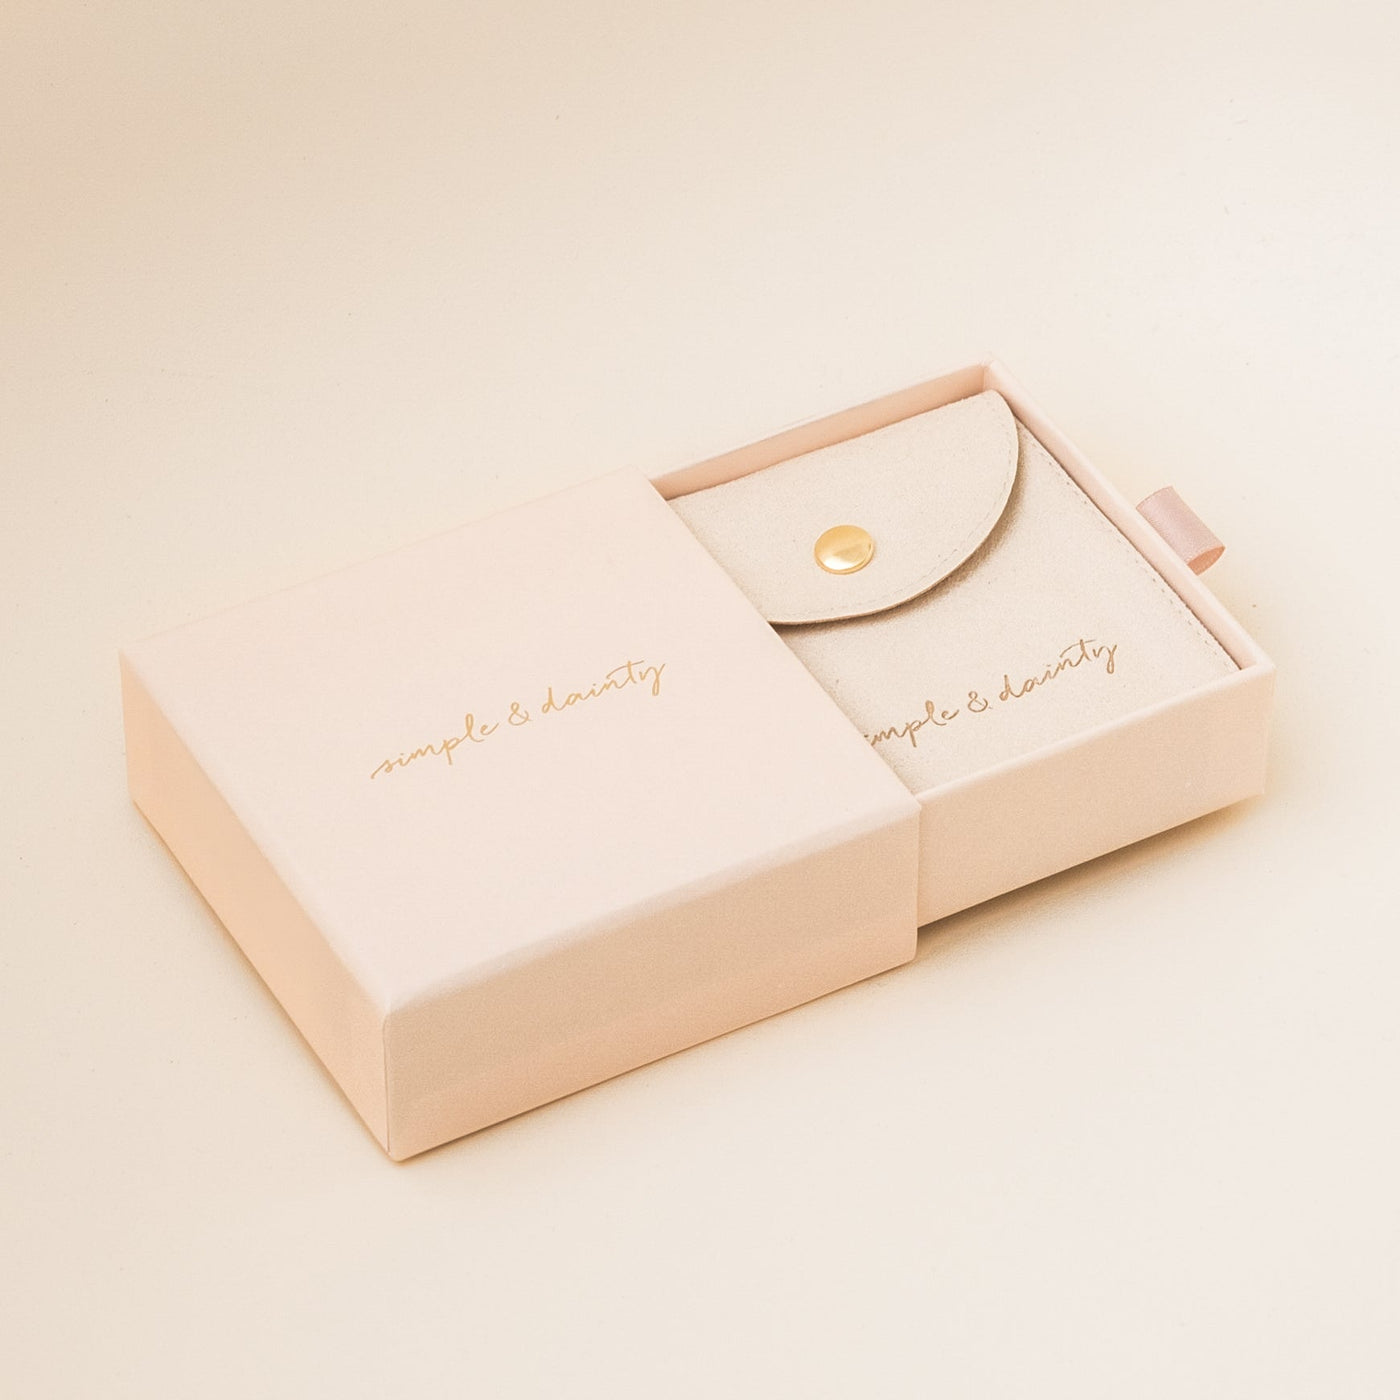 Gift Box | Simple & Dainty Jewelry